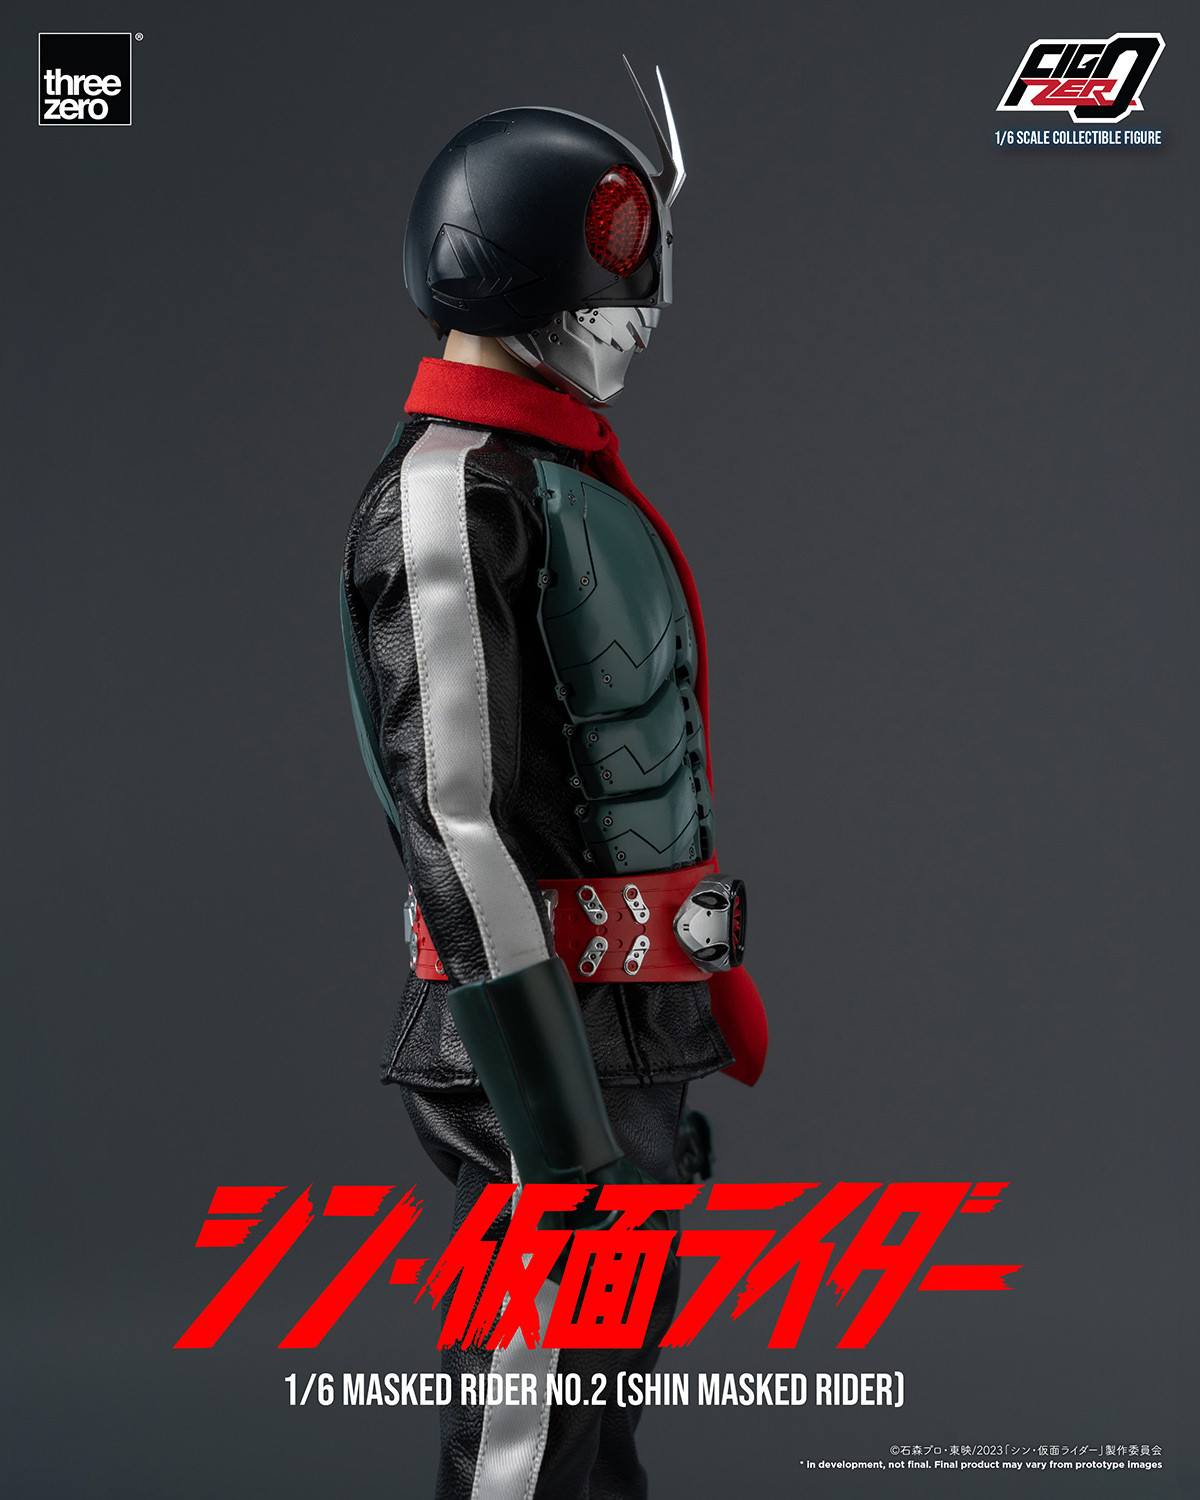 Shin Masked Rider No. 2 (Prototype Shown) View 11